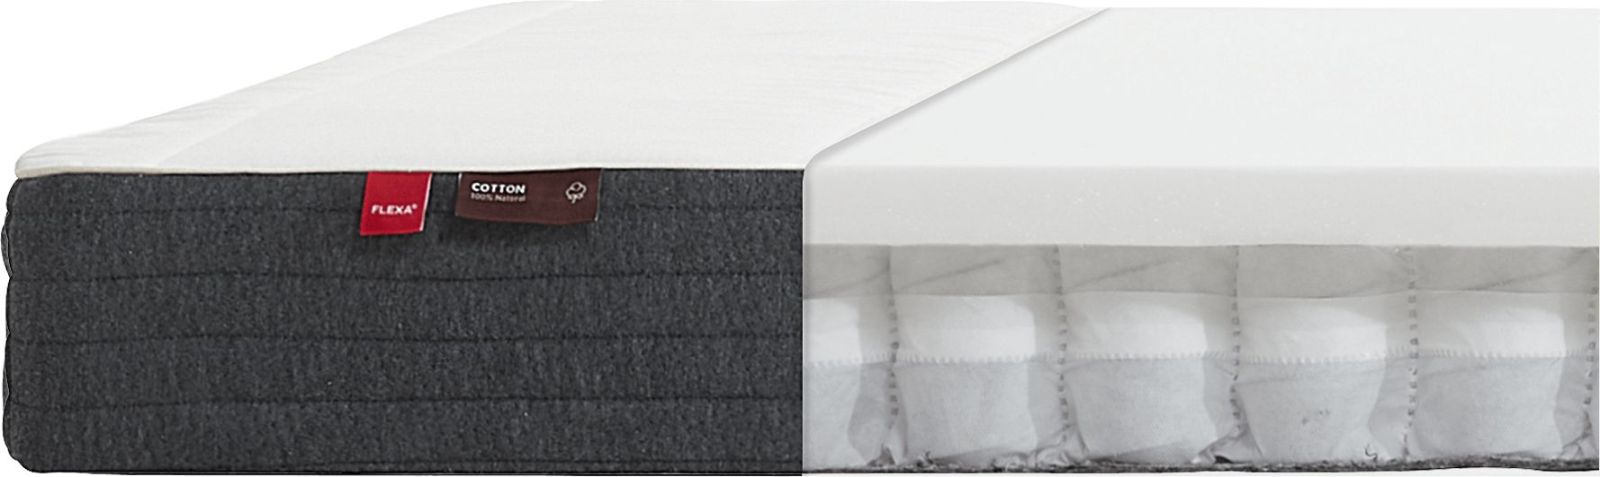 Flexa Pružinová matrace Flexa - Sleep s bavlněným potahem 200x140 cm